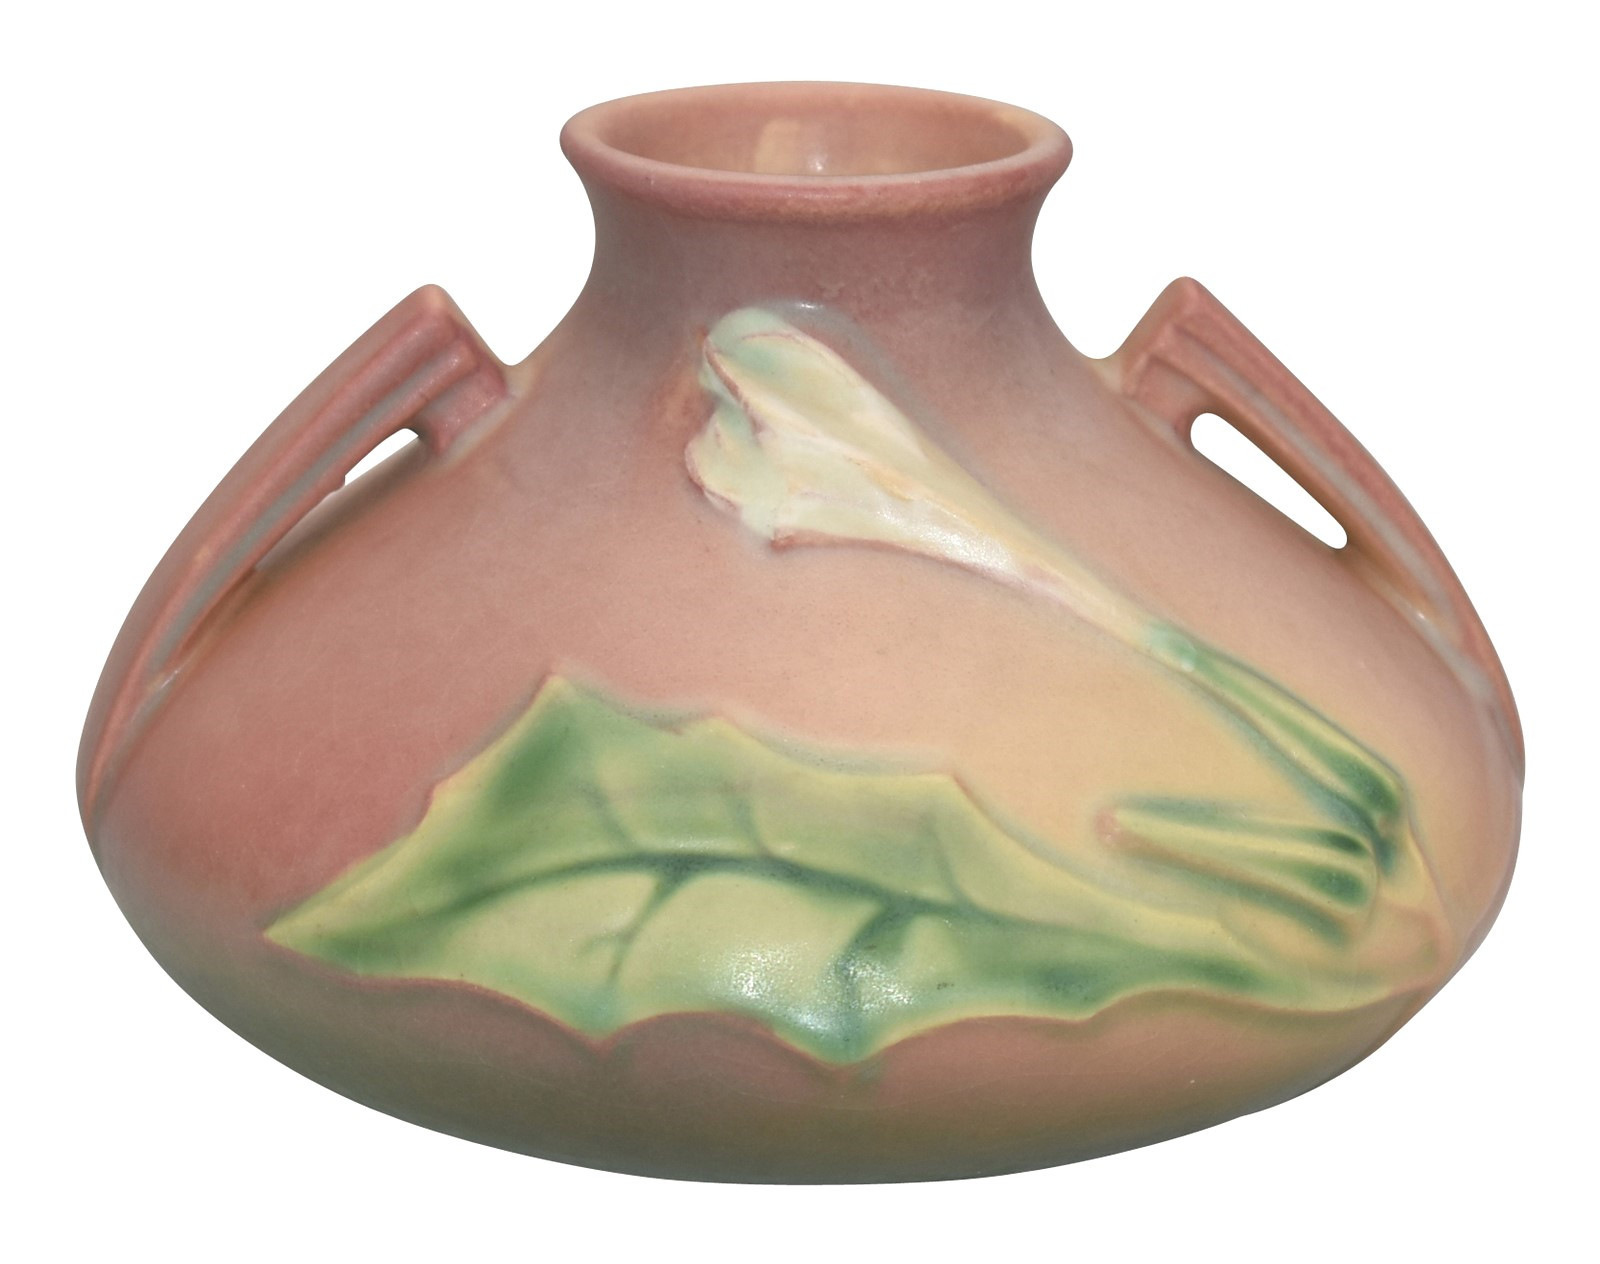 roseville snowberry vase of roseville pottery thornapple pink vase 808 4 just art pottery from regarding roseville pottery thornapple pink vase 808 4